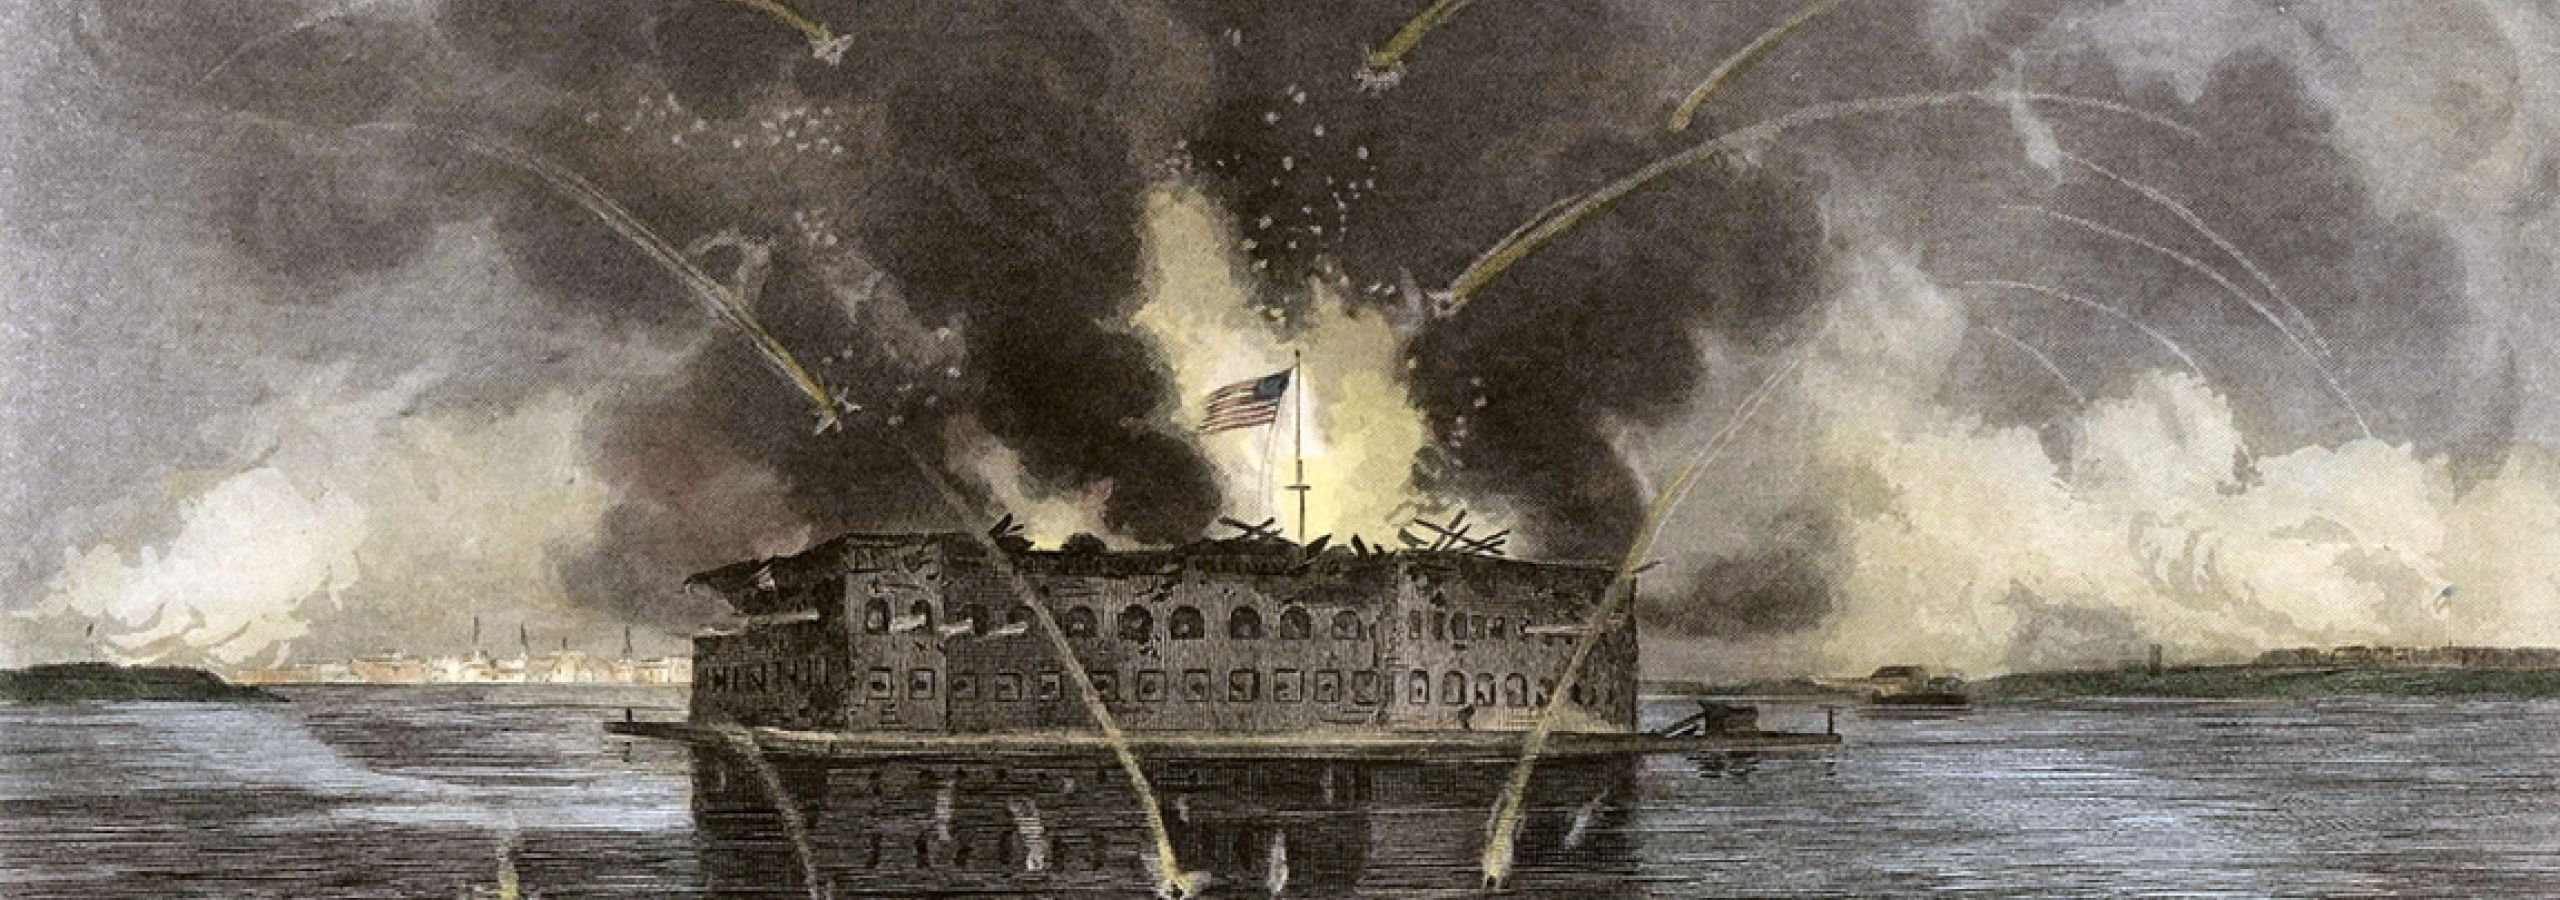 Charleston History Tours - Battle of Fort Sumter